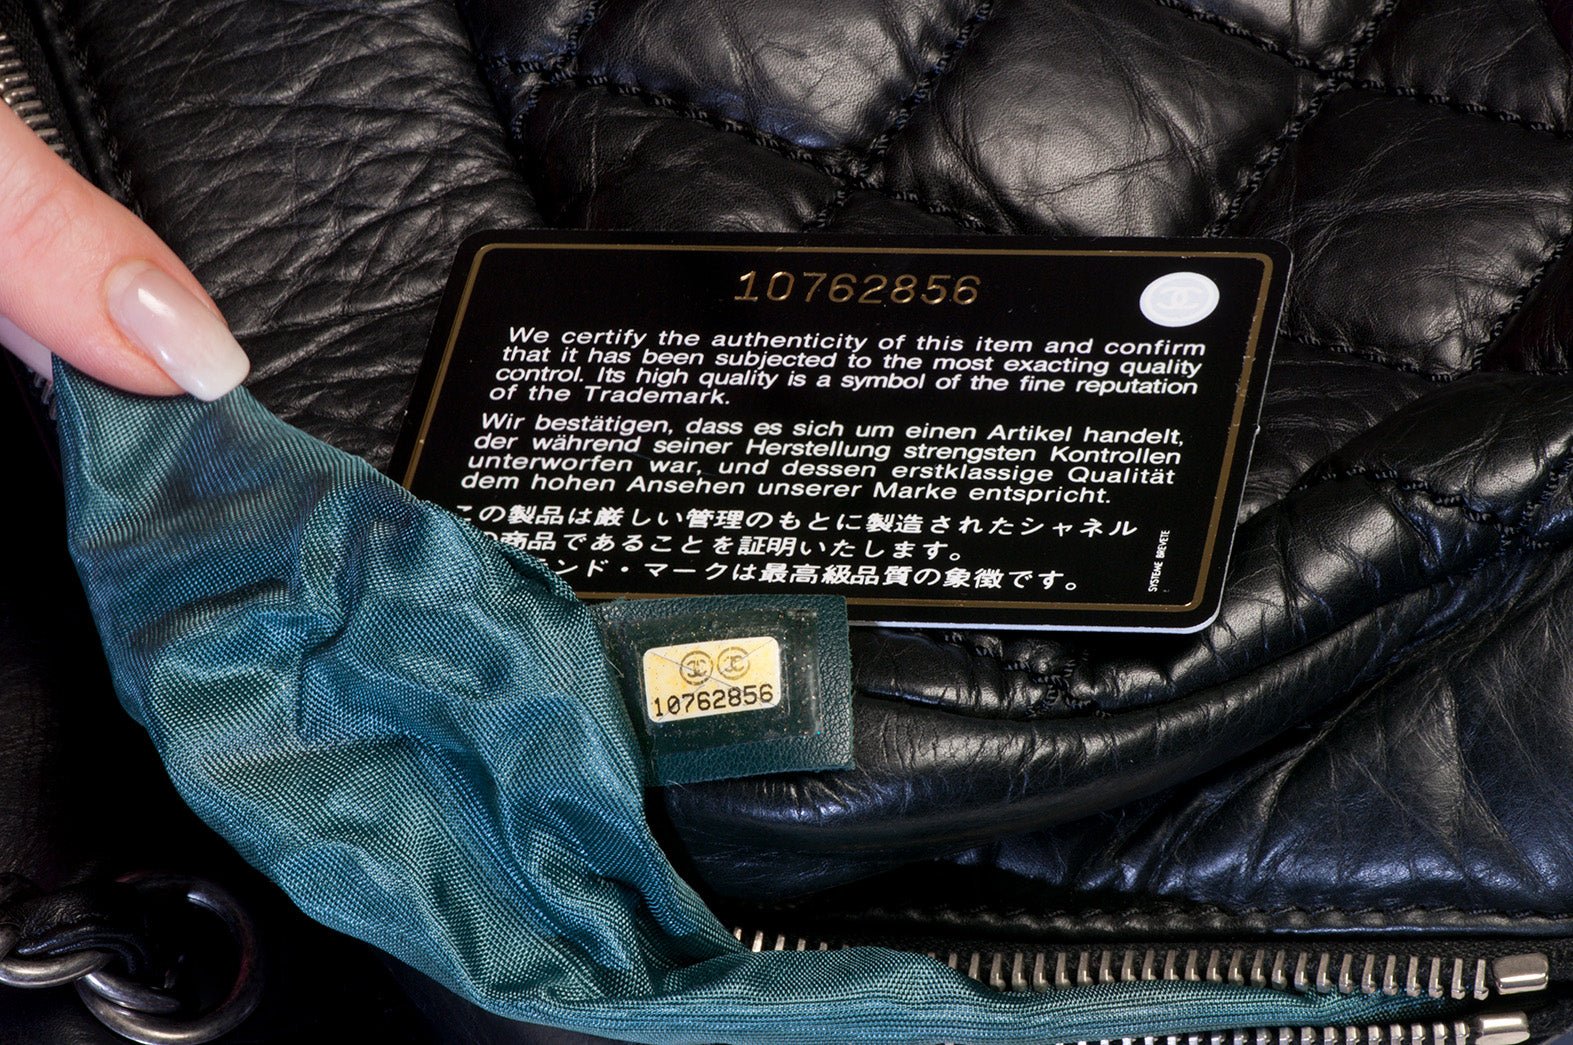 Chanel Paris CC 2005 Black Calfskin Quilted Leather Expandable PNY Maxi Flap Bag